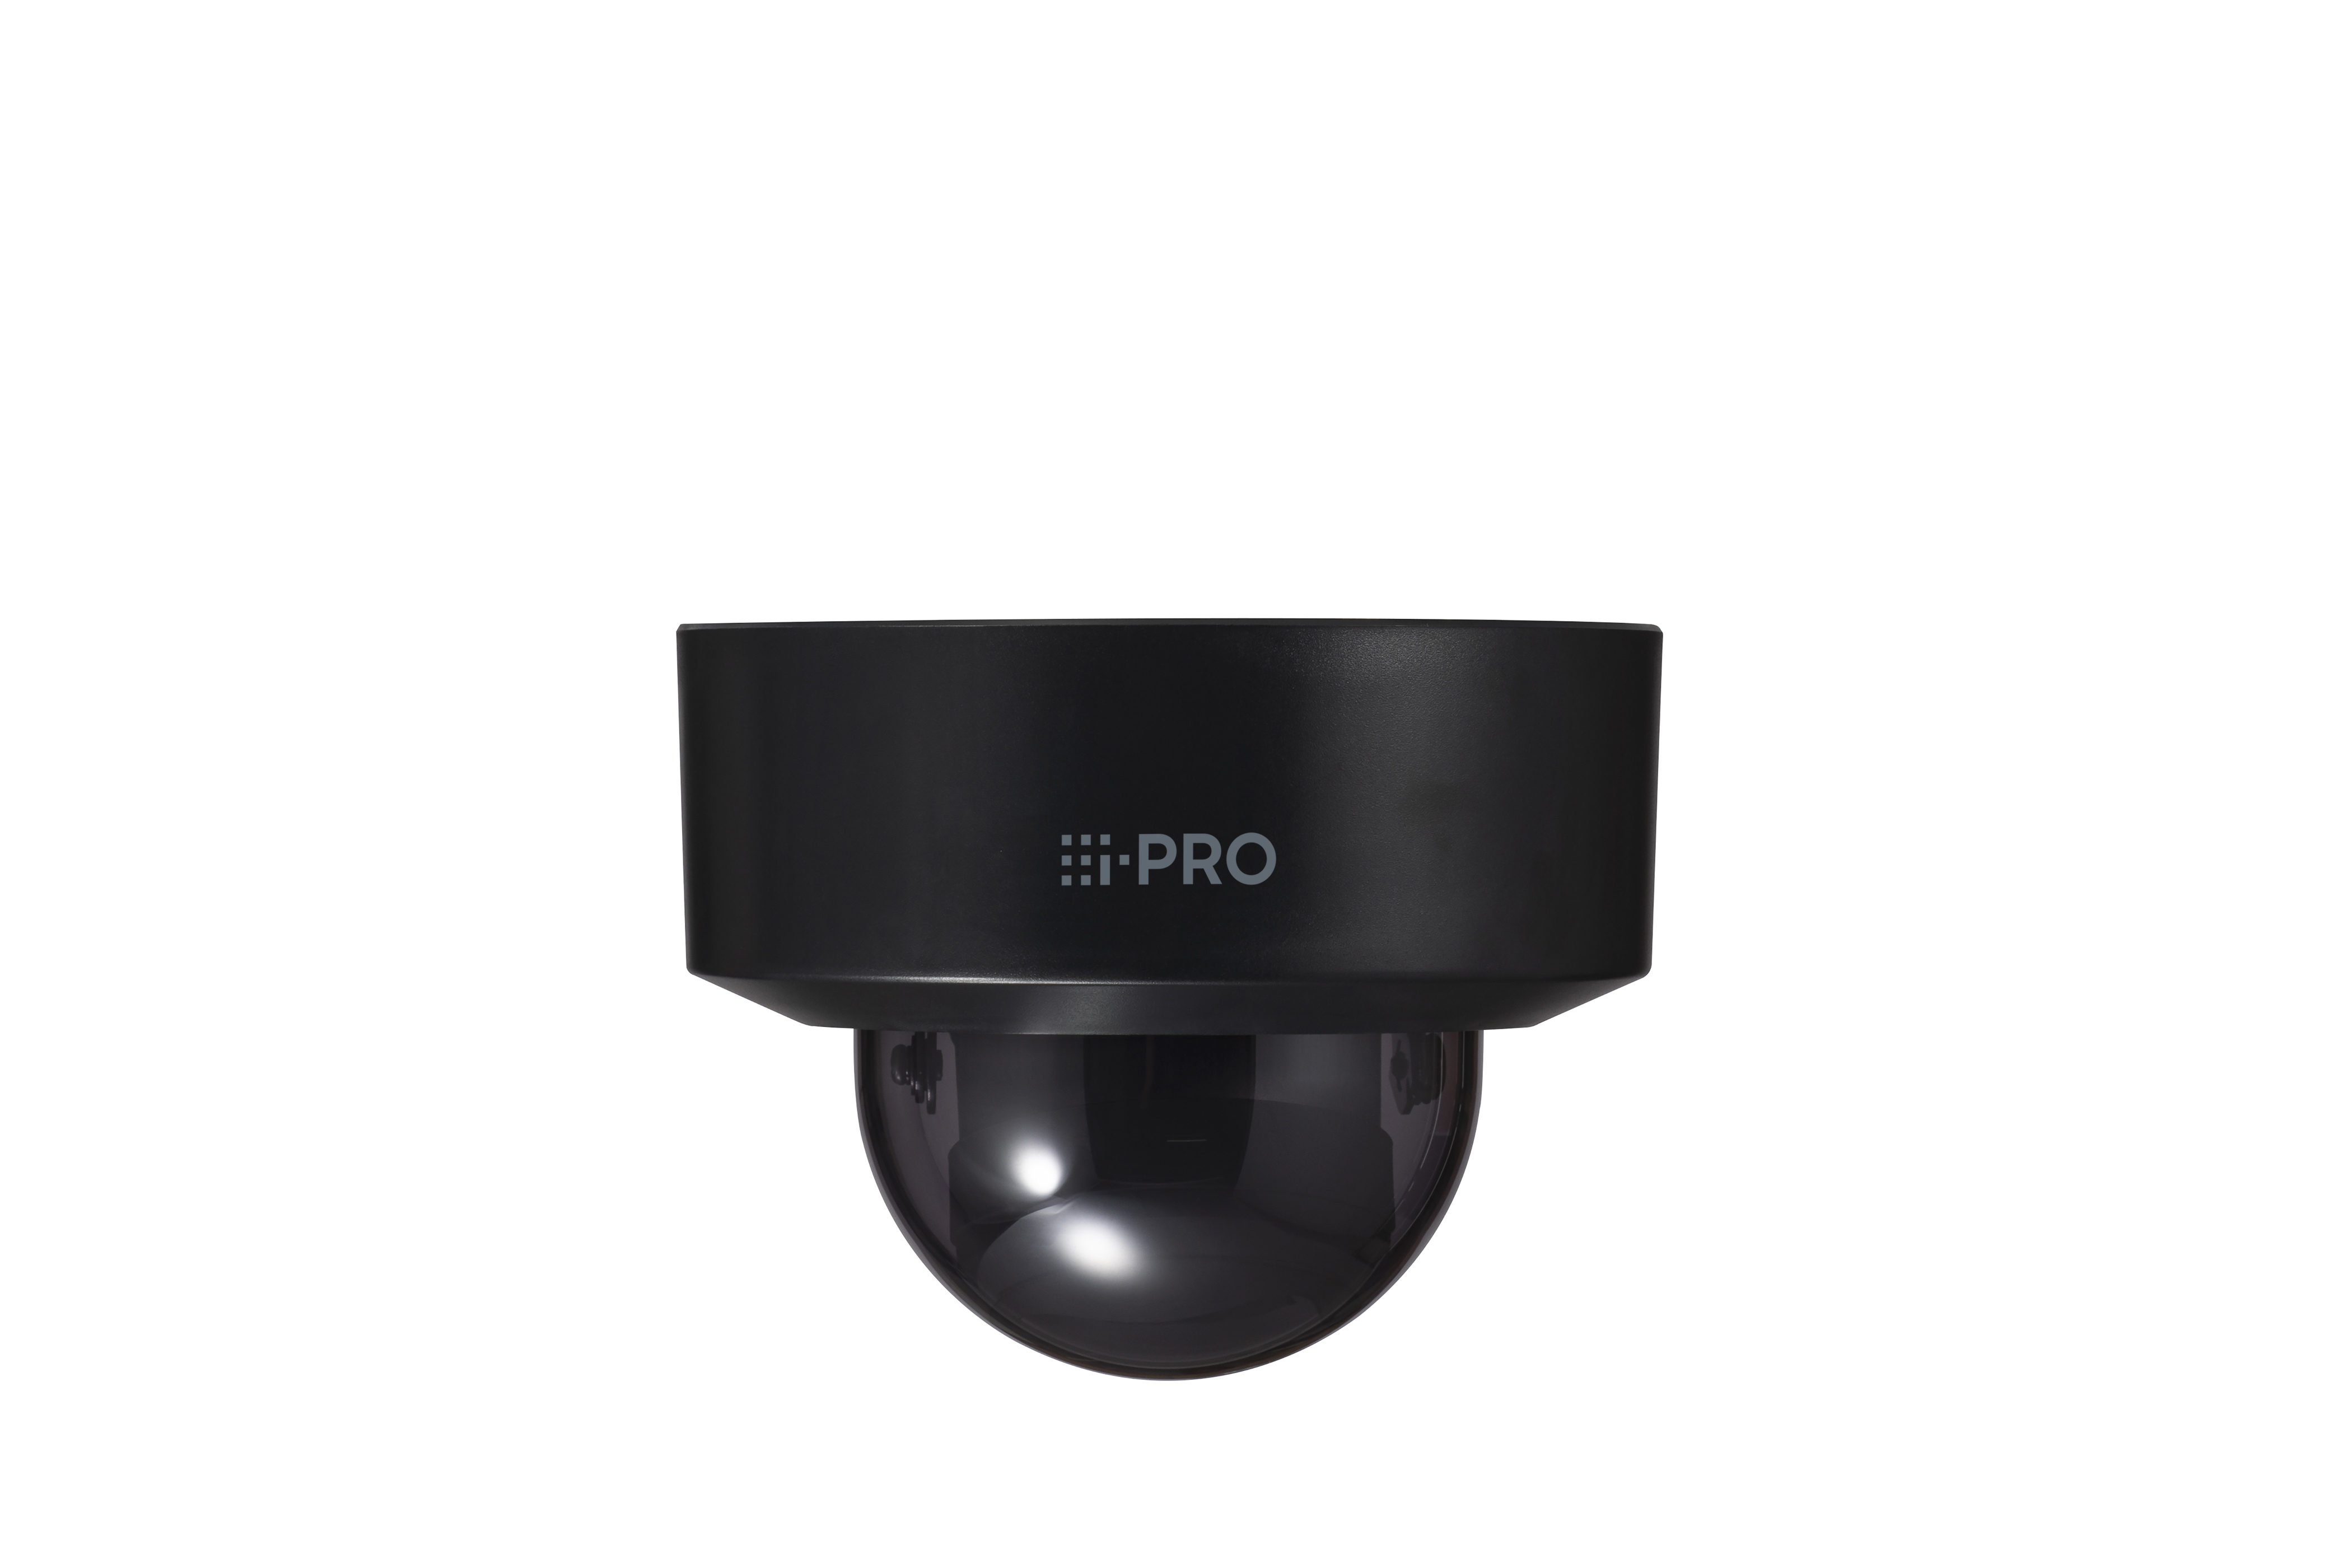 i-PRO lanza cámaras en color negro con Inteligencia Artificial